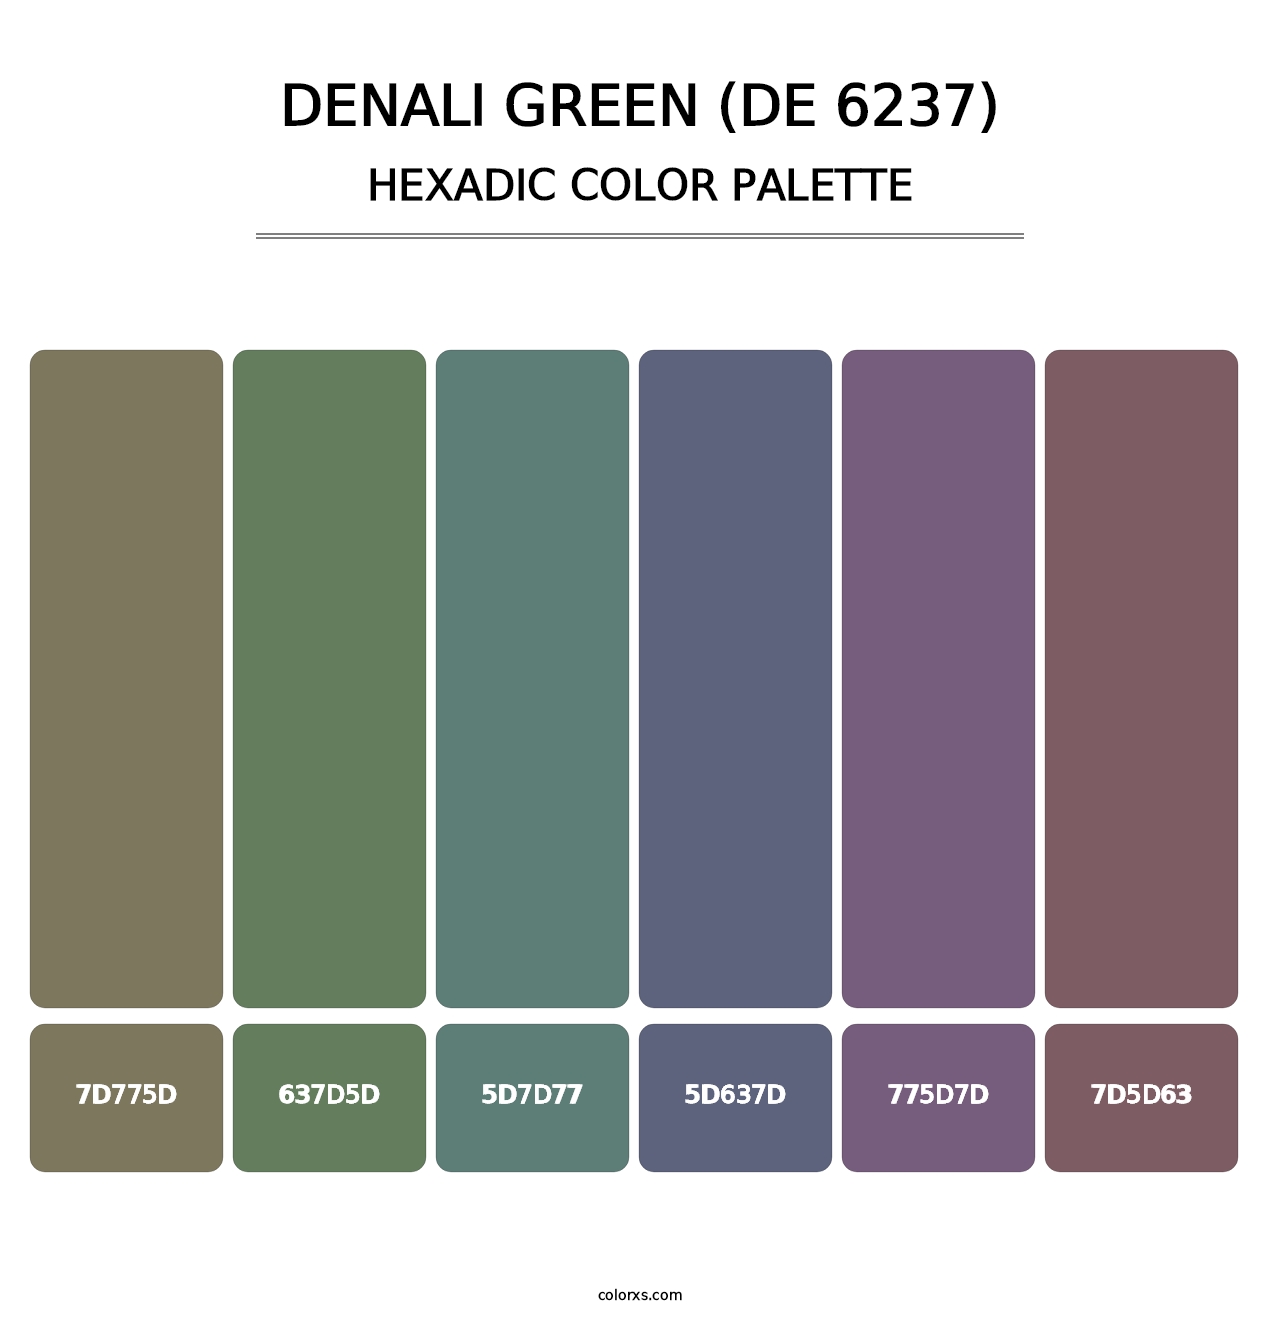 Denali Green (DE 6237) - Hexadic Color Palette